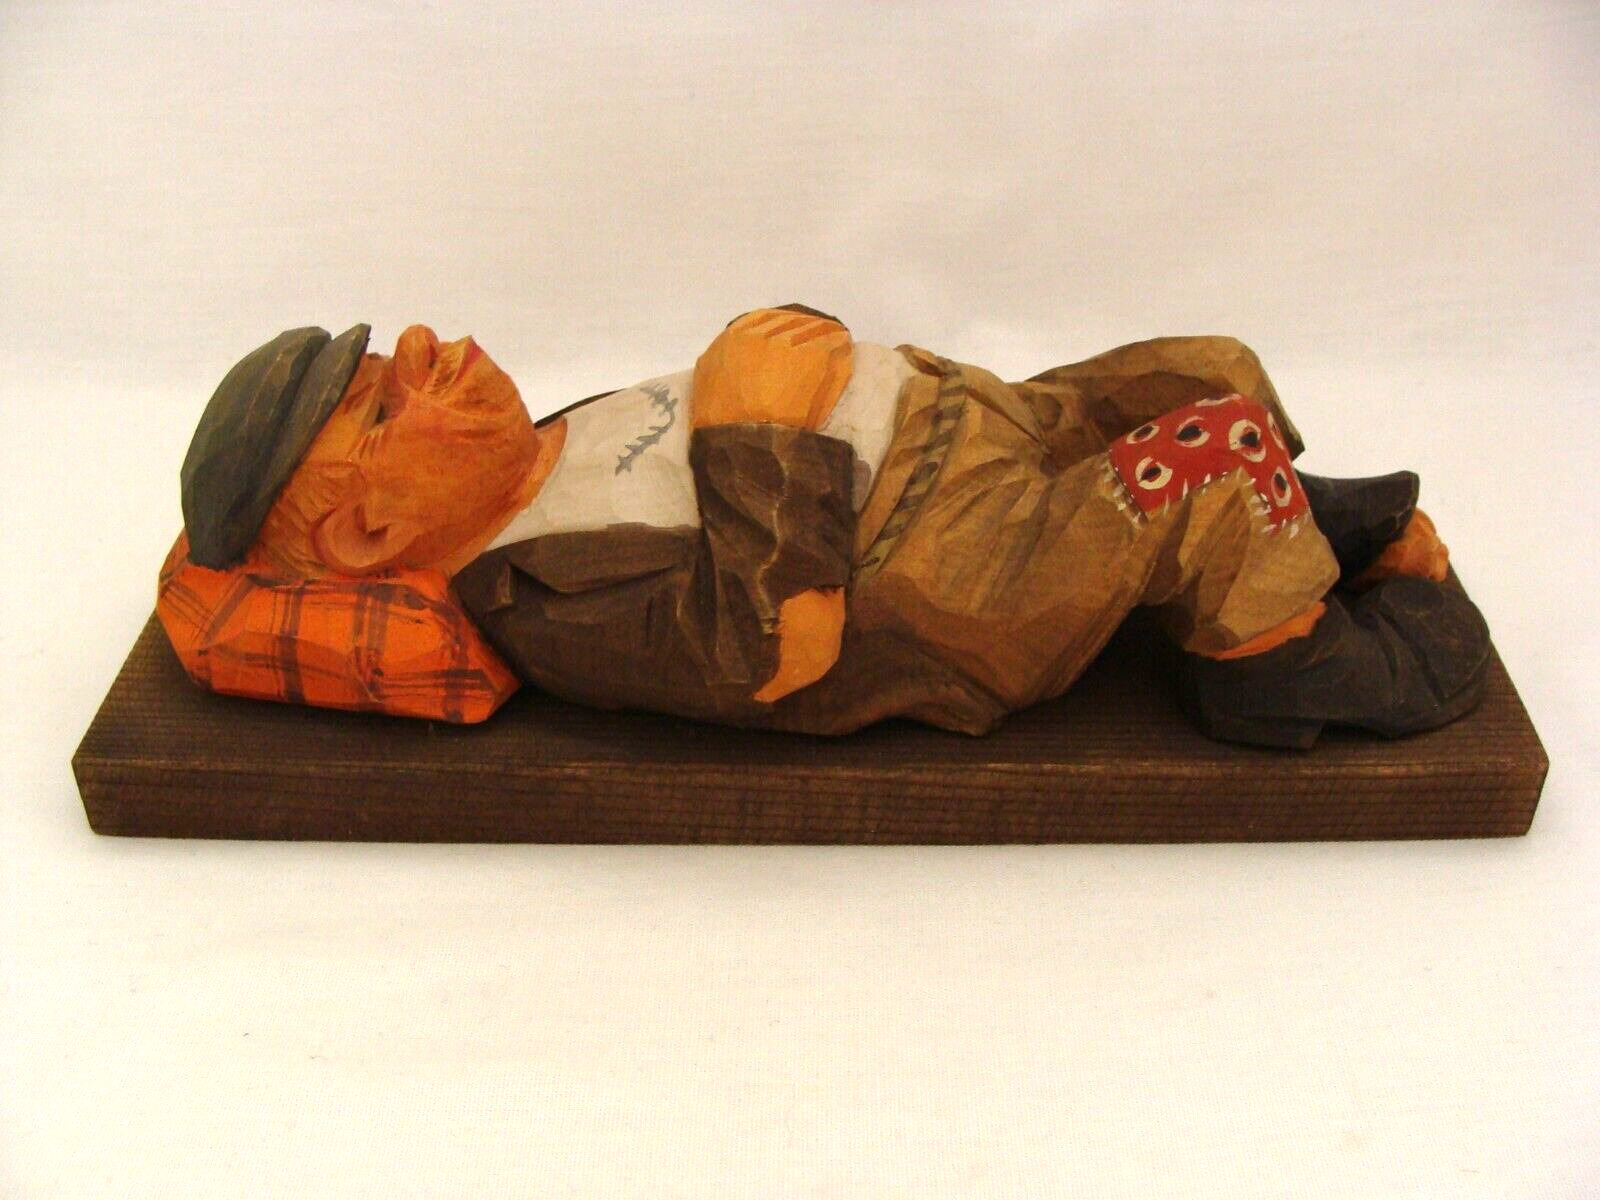 C.O. Trygg Sweden Carved Wooden Lying Down Sleeping Hobo Figurine 8 Inch 1954